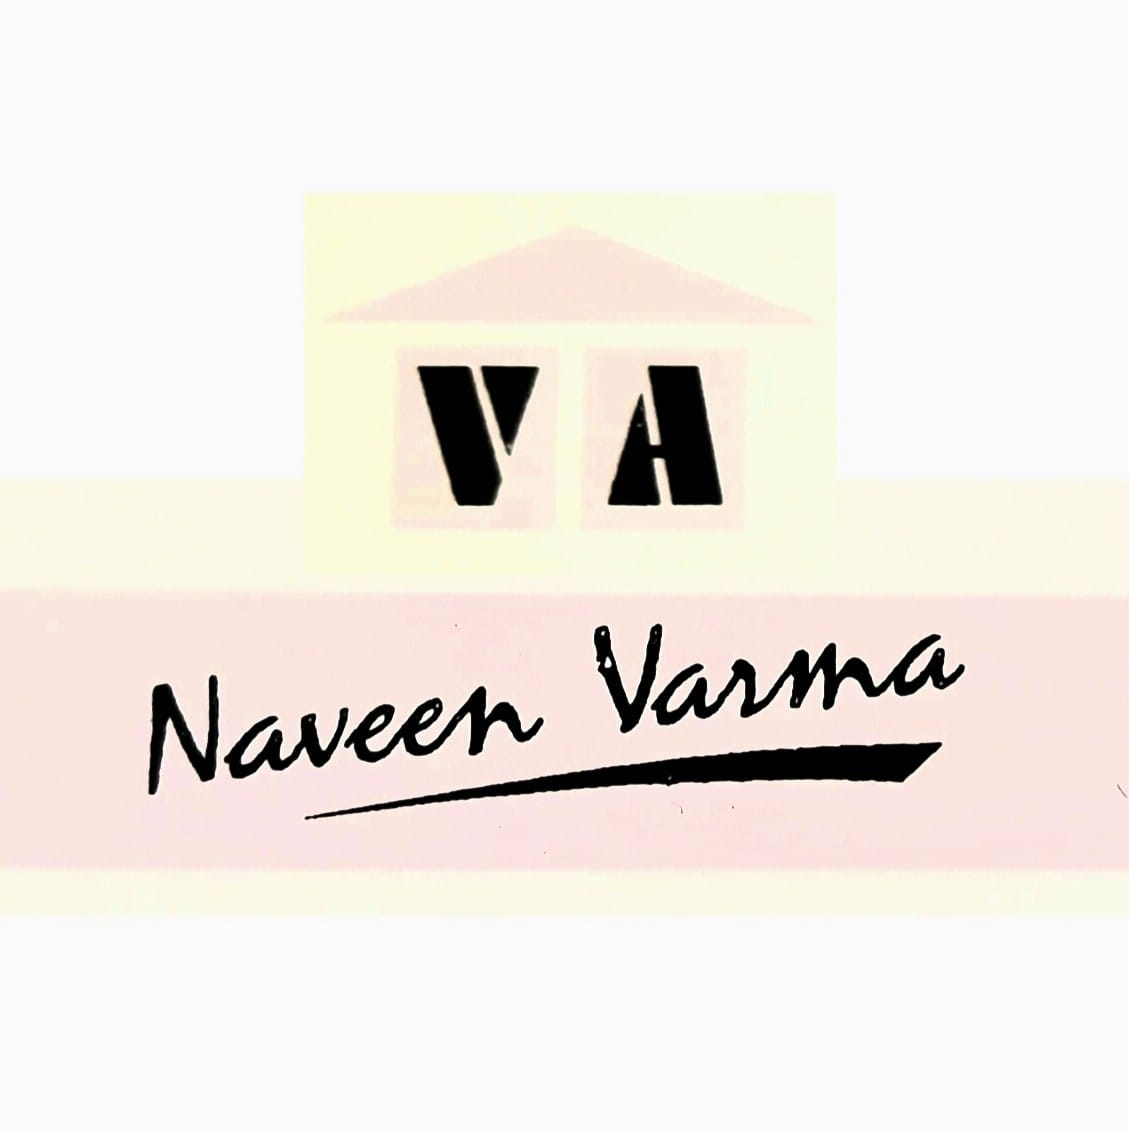 Varma & Associates - Naveen Varma|Architect|Professional Services